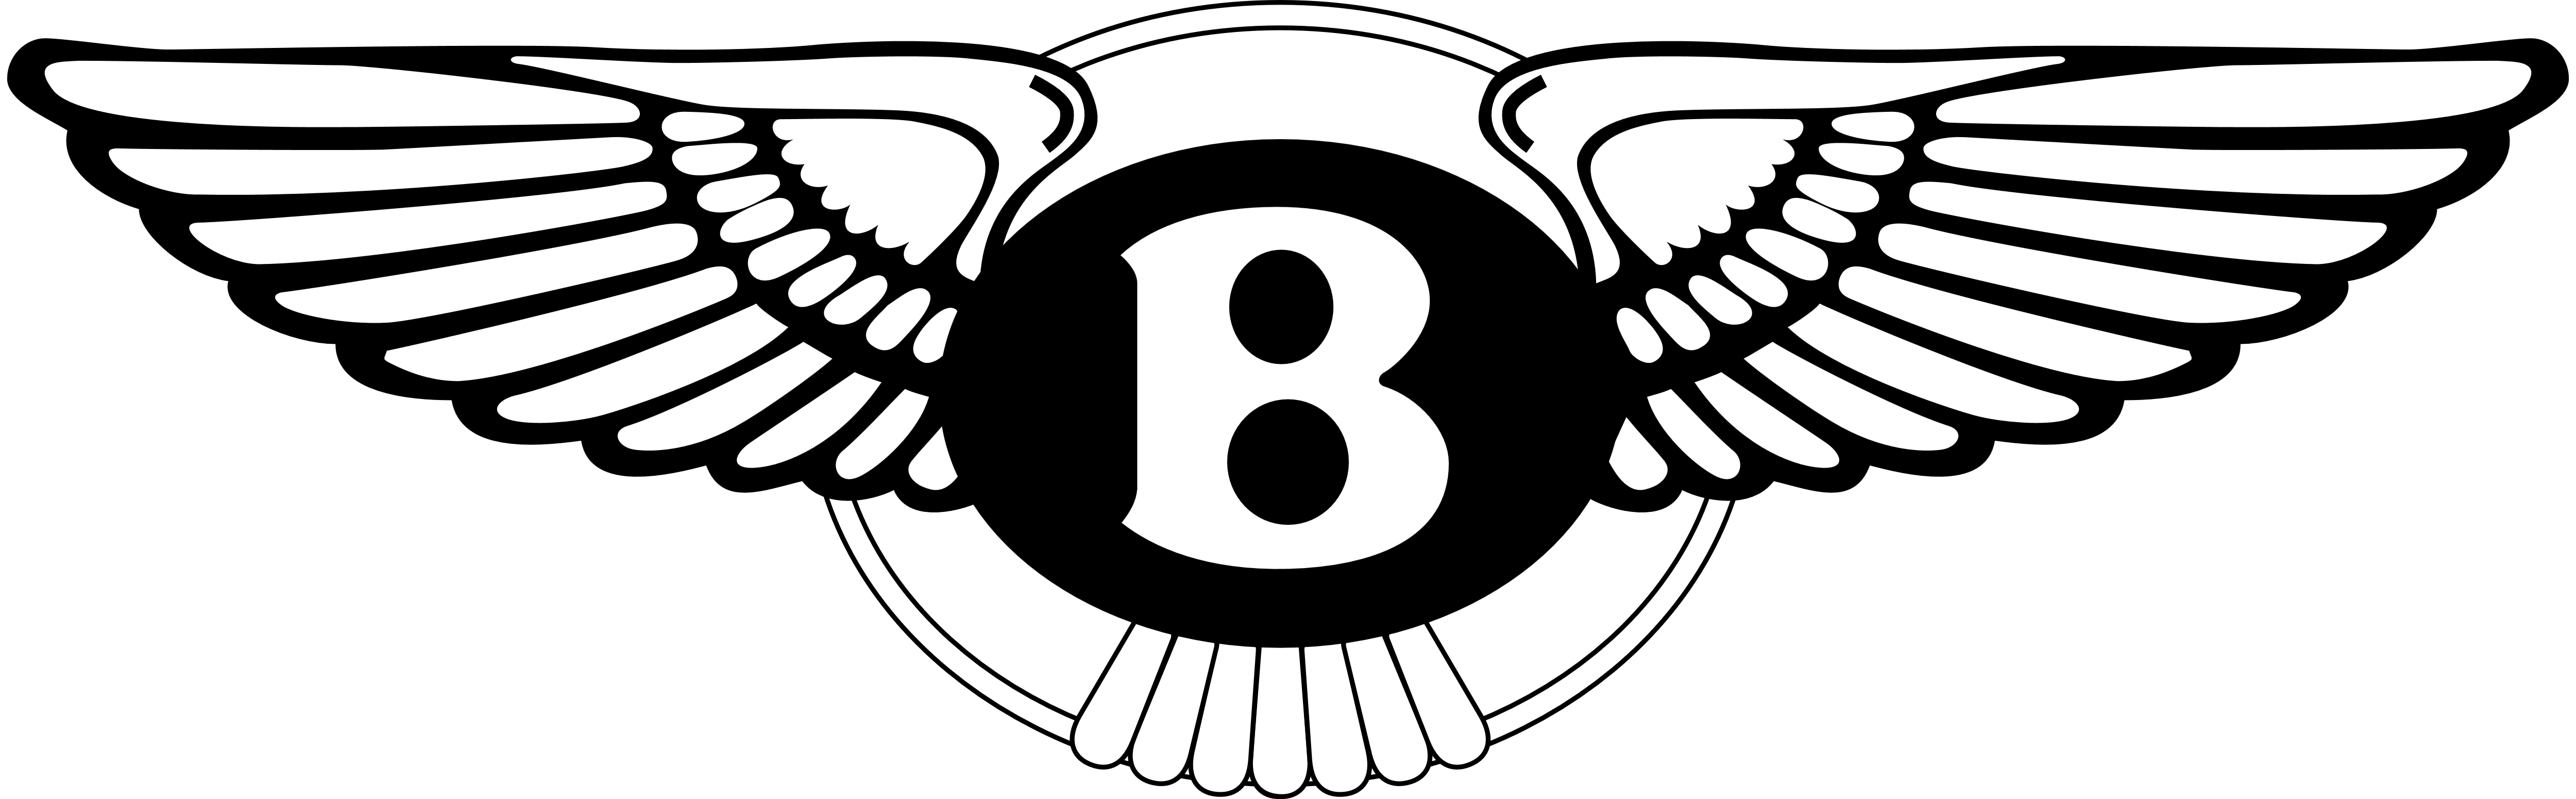 Bently Logo - Bentley – Logos Download